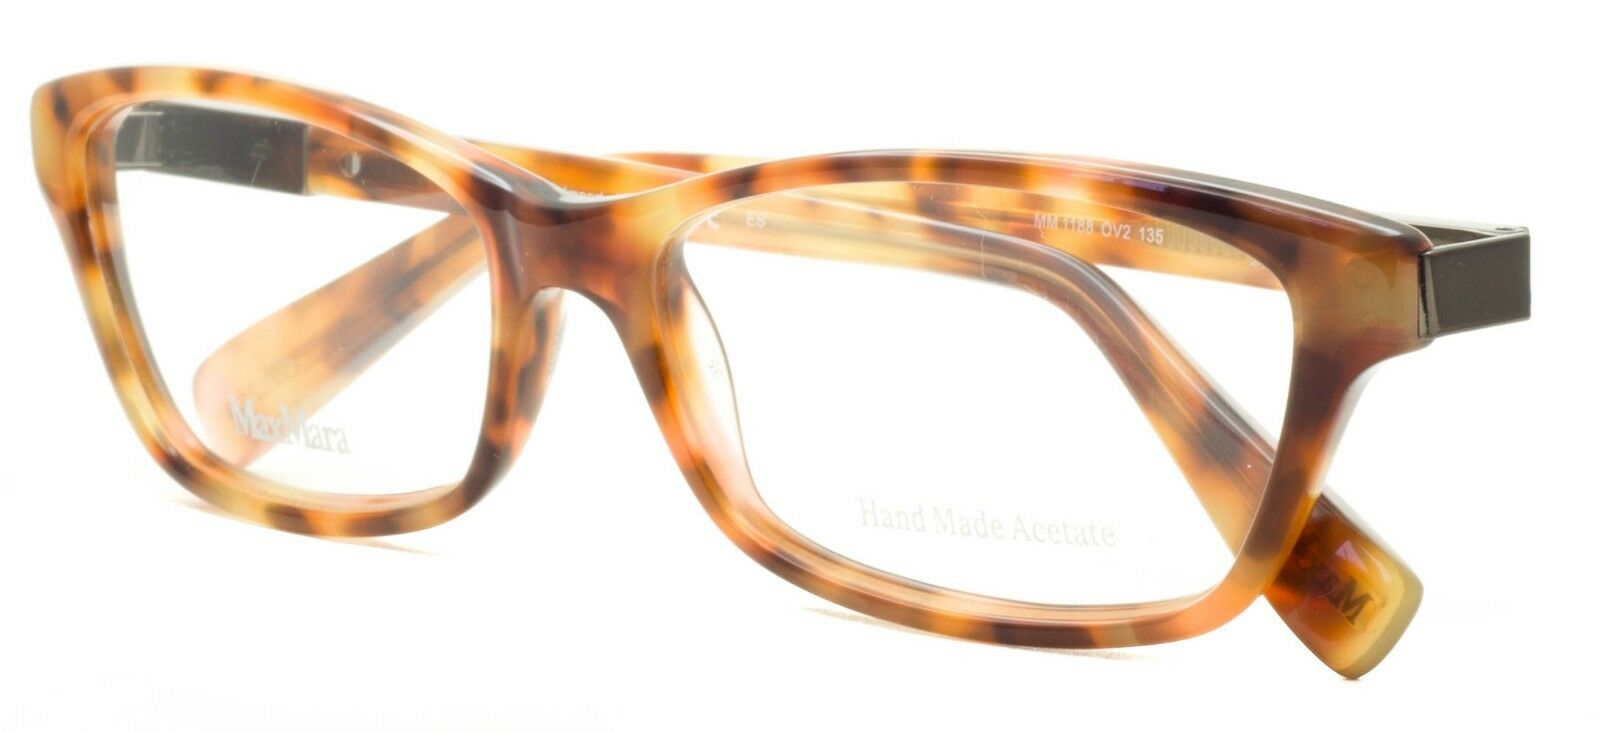 MAX MARA MM 1188 OV2 53mm Eyewear RX Optical Glasses FRAMES Eyeglasses New BNIB